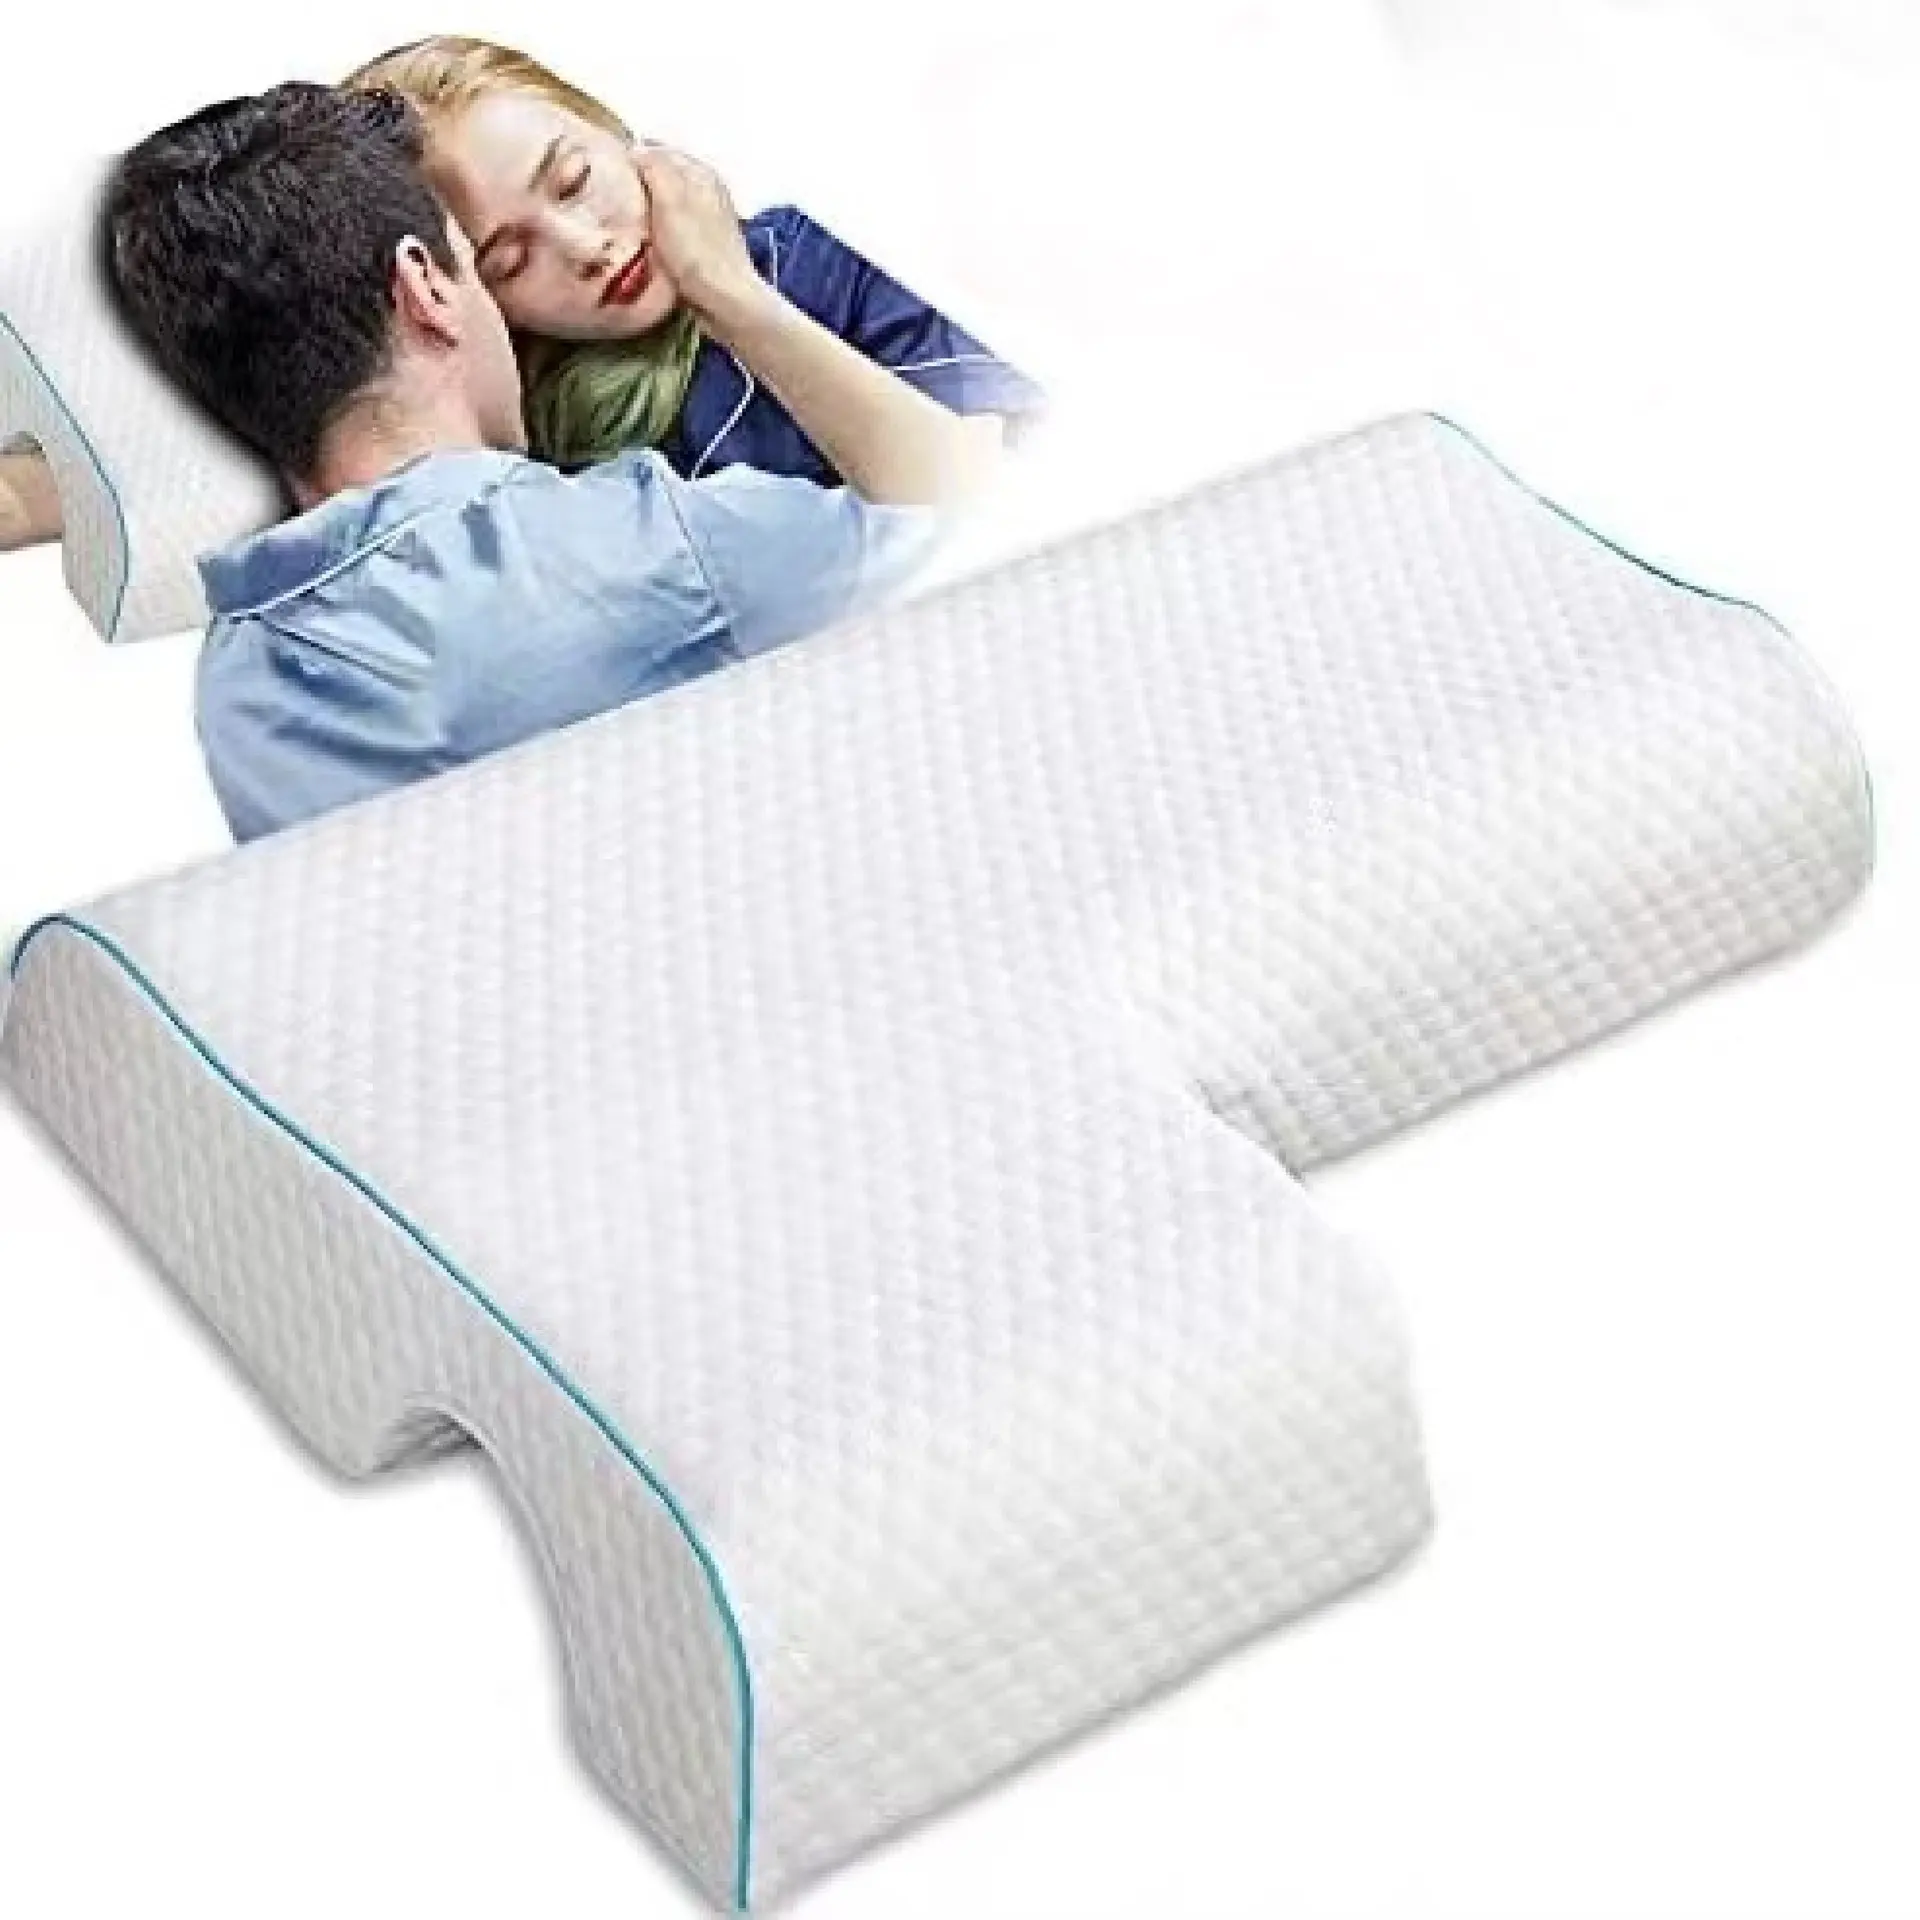 AG grosir bantal Pasangan Bantal tanpa tekanan perlindungan tangan leher tengkuk bantuan tidur bantal memori terintegrasi bantal lengan tunggal